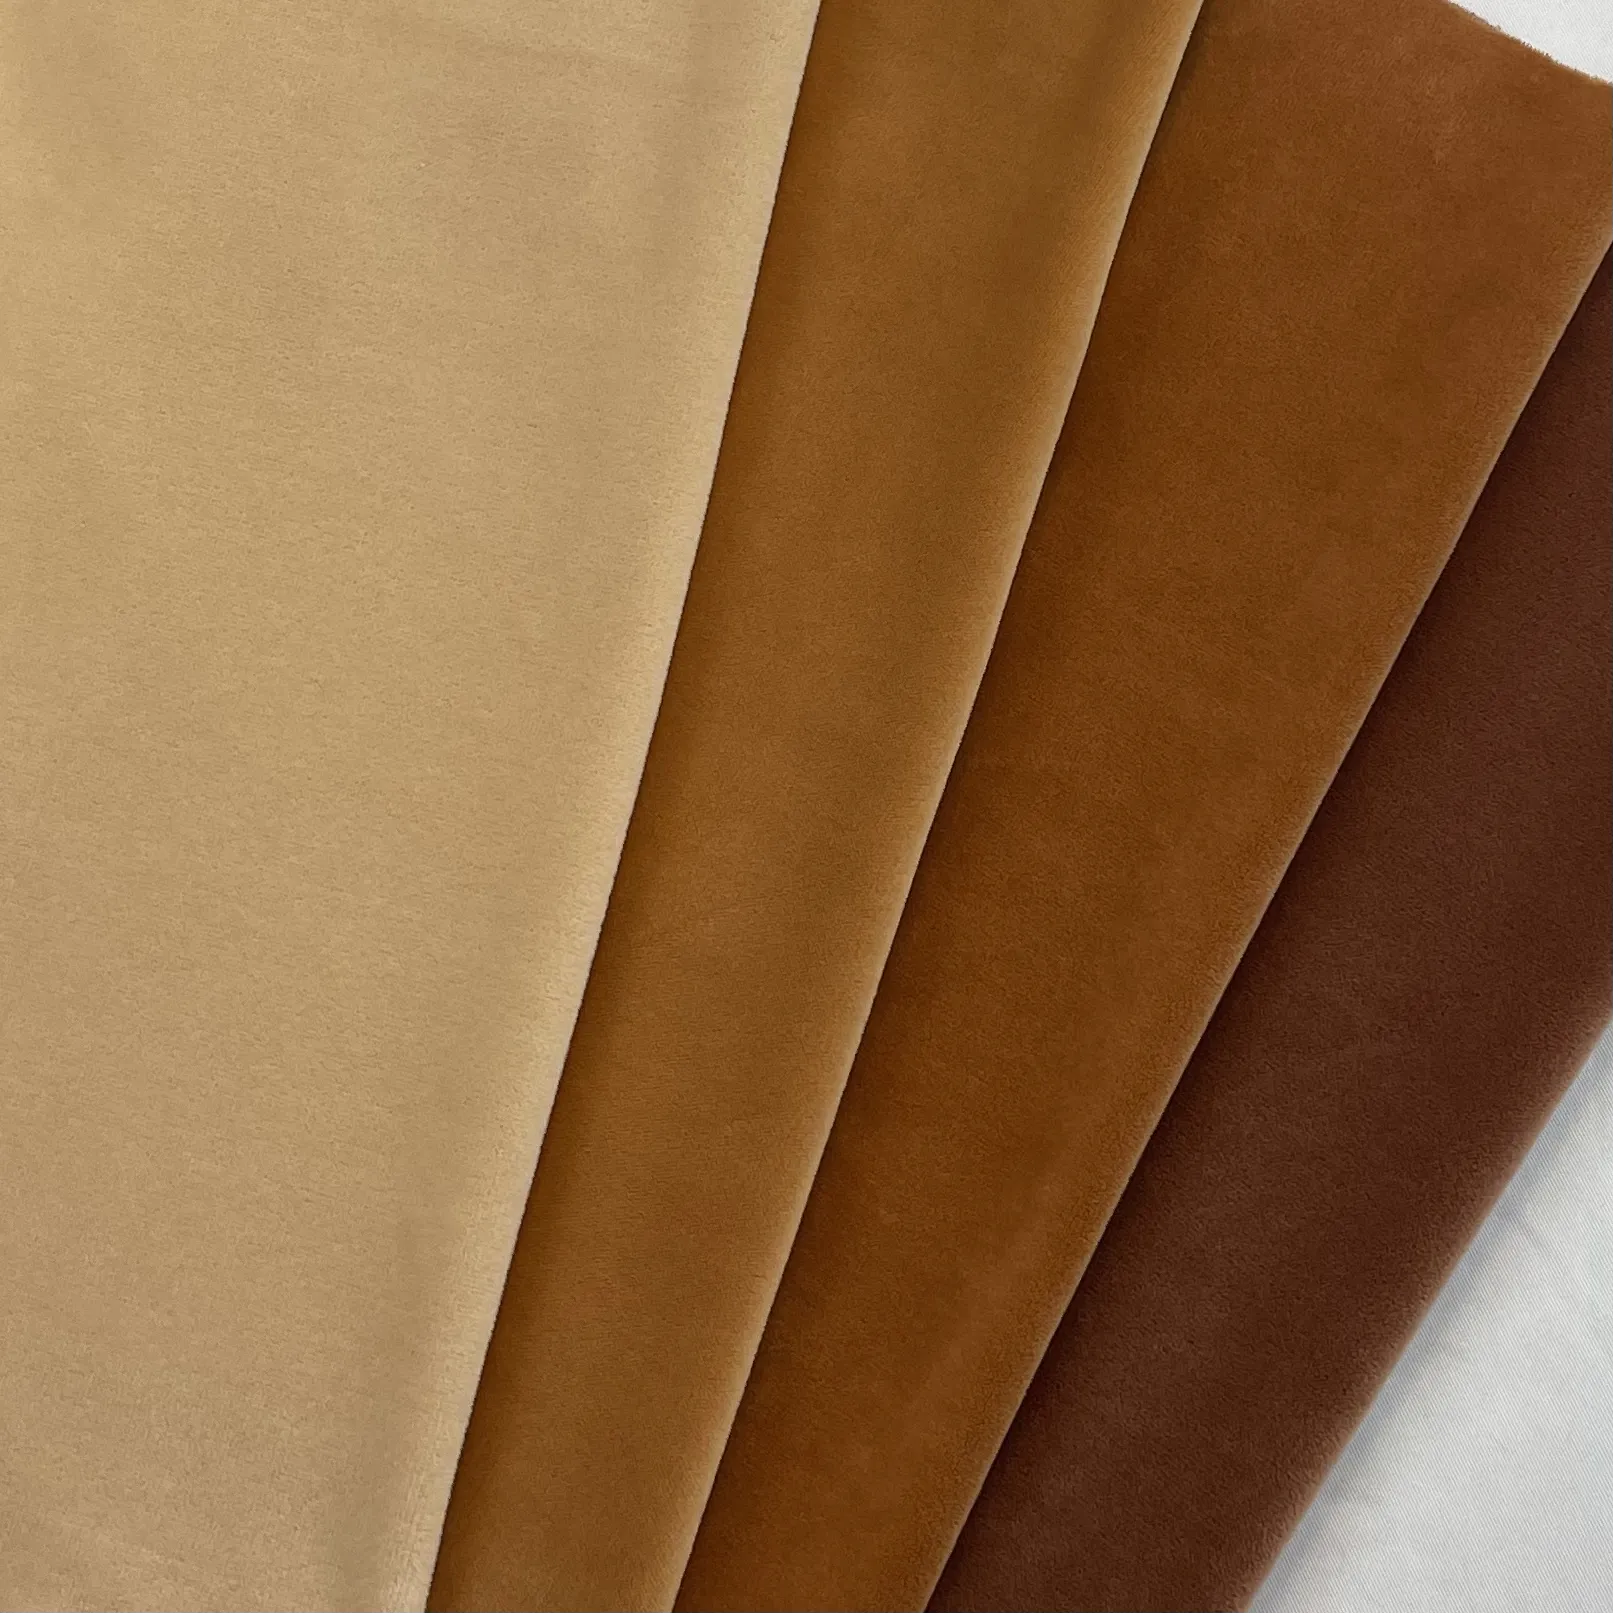 Multiwarna 100 Polyester kain velour super lembut kain beludru untuk set piyama untuk wanita